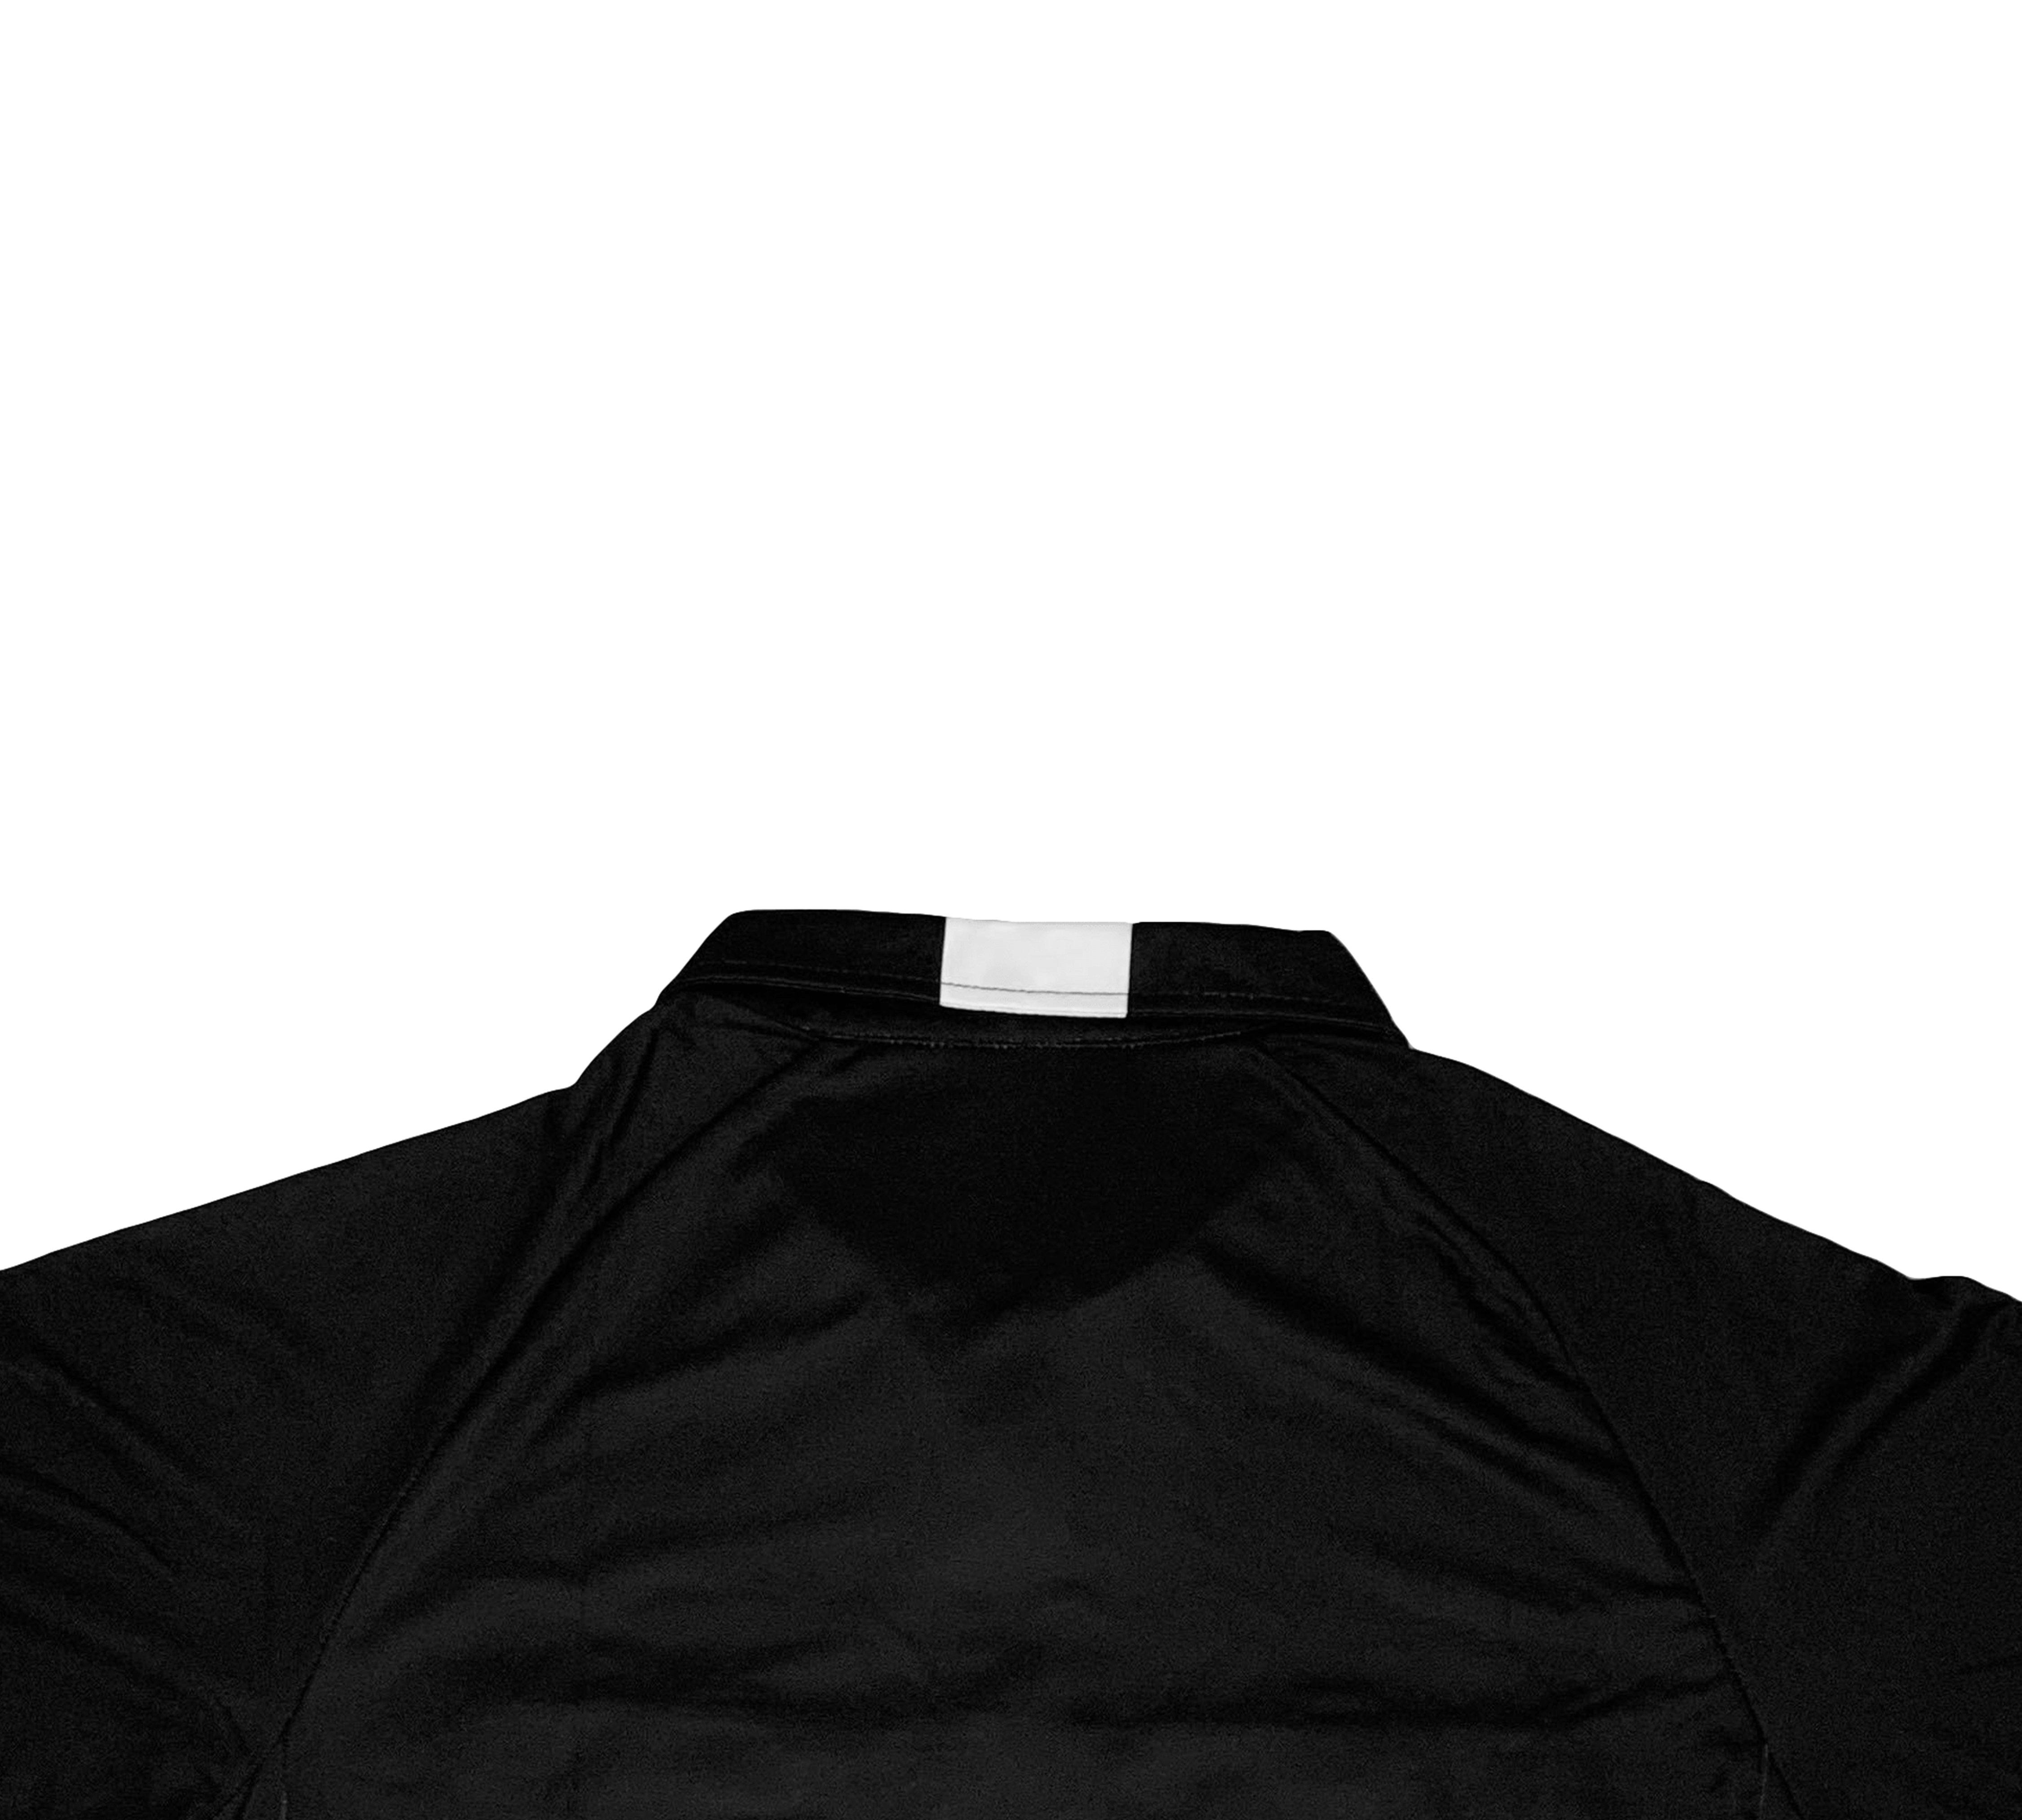 KAMAJSIO Pro Soccer Referee Shirt Men - Adult & Youth Soccer Referee Jersey Short Sleeve, Football Referee Shirts Women